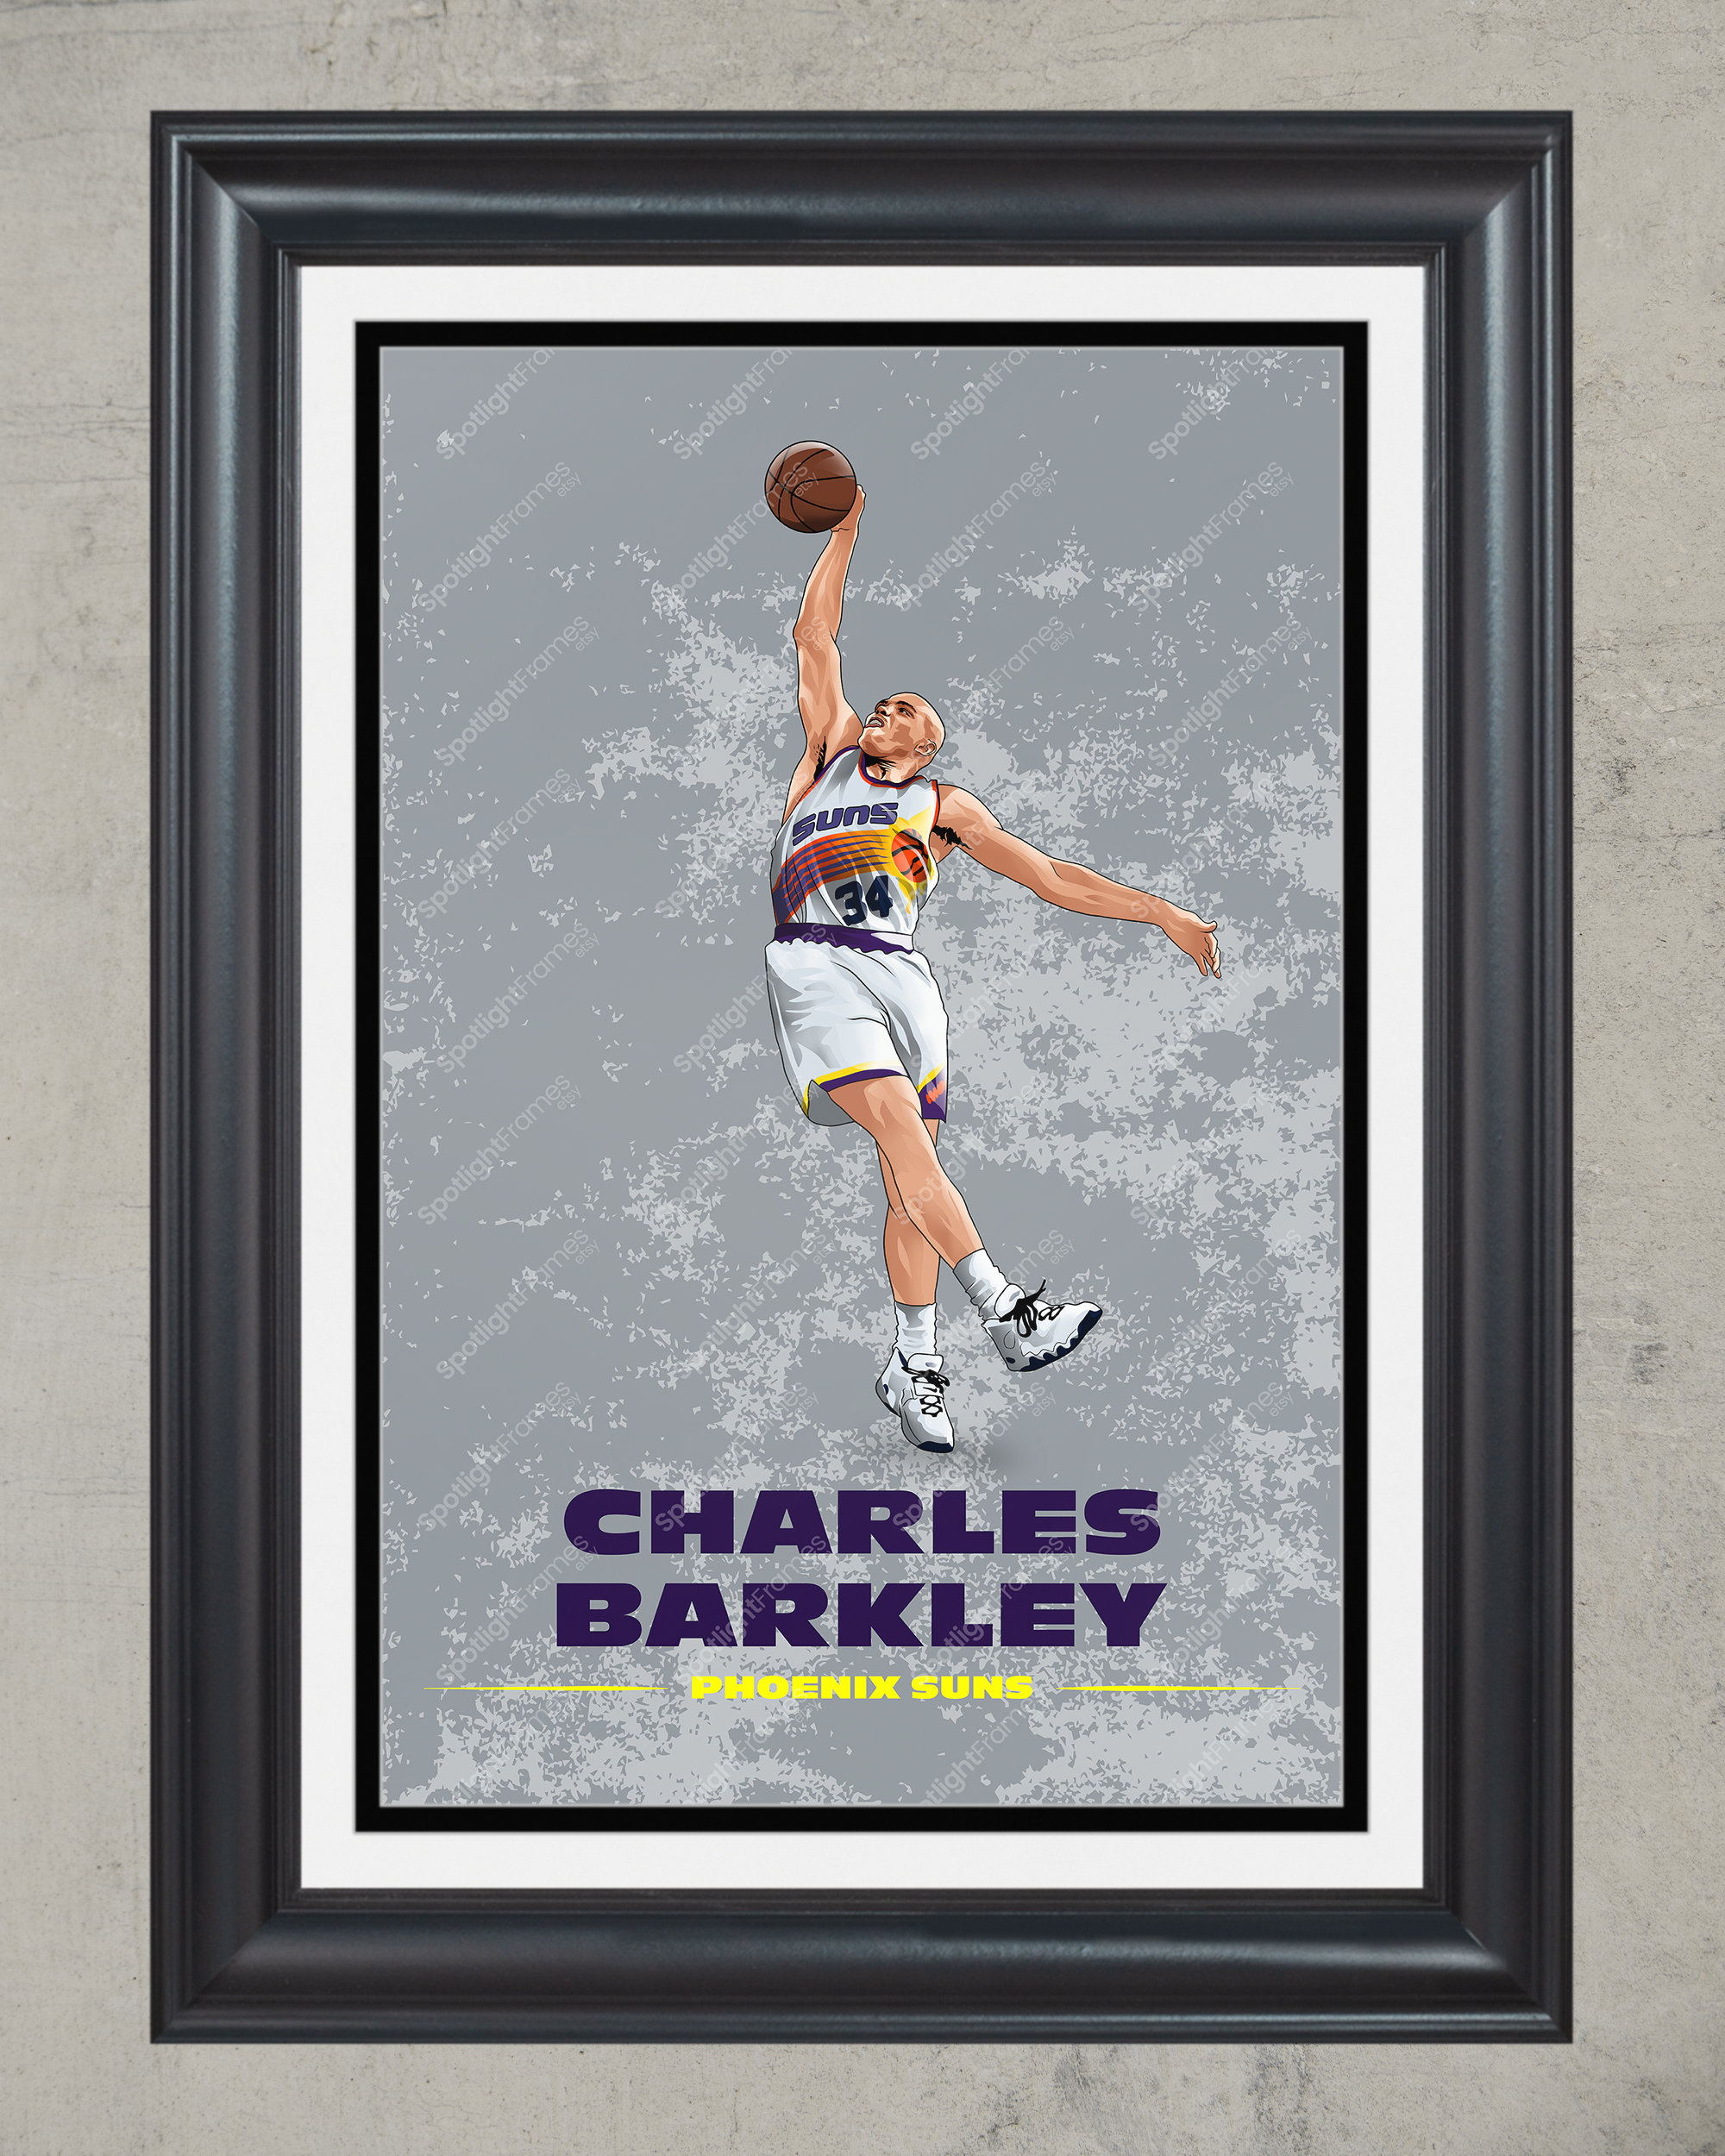 1994 1995 PHOENIX SUNS 8X10 TEAM PHOTO BASKETBALL NBA USA CHARLES BARKLEY